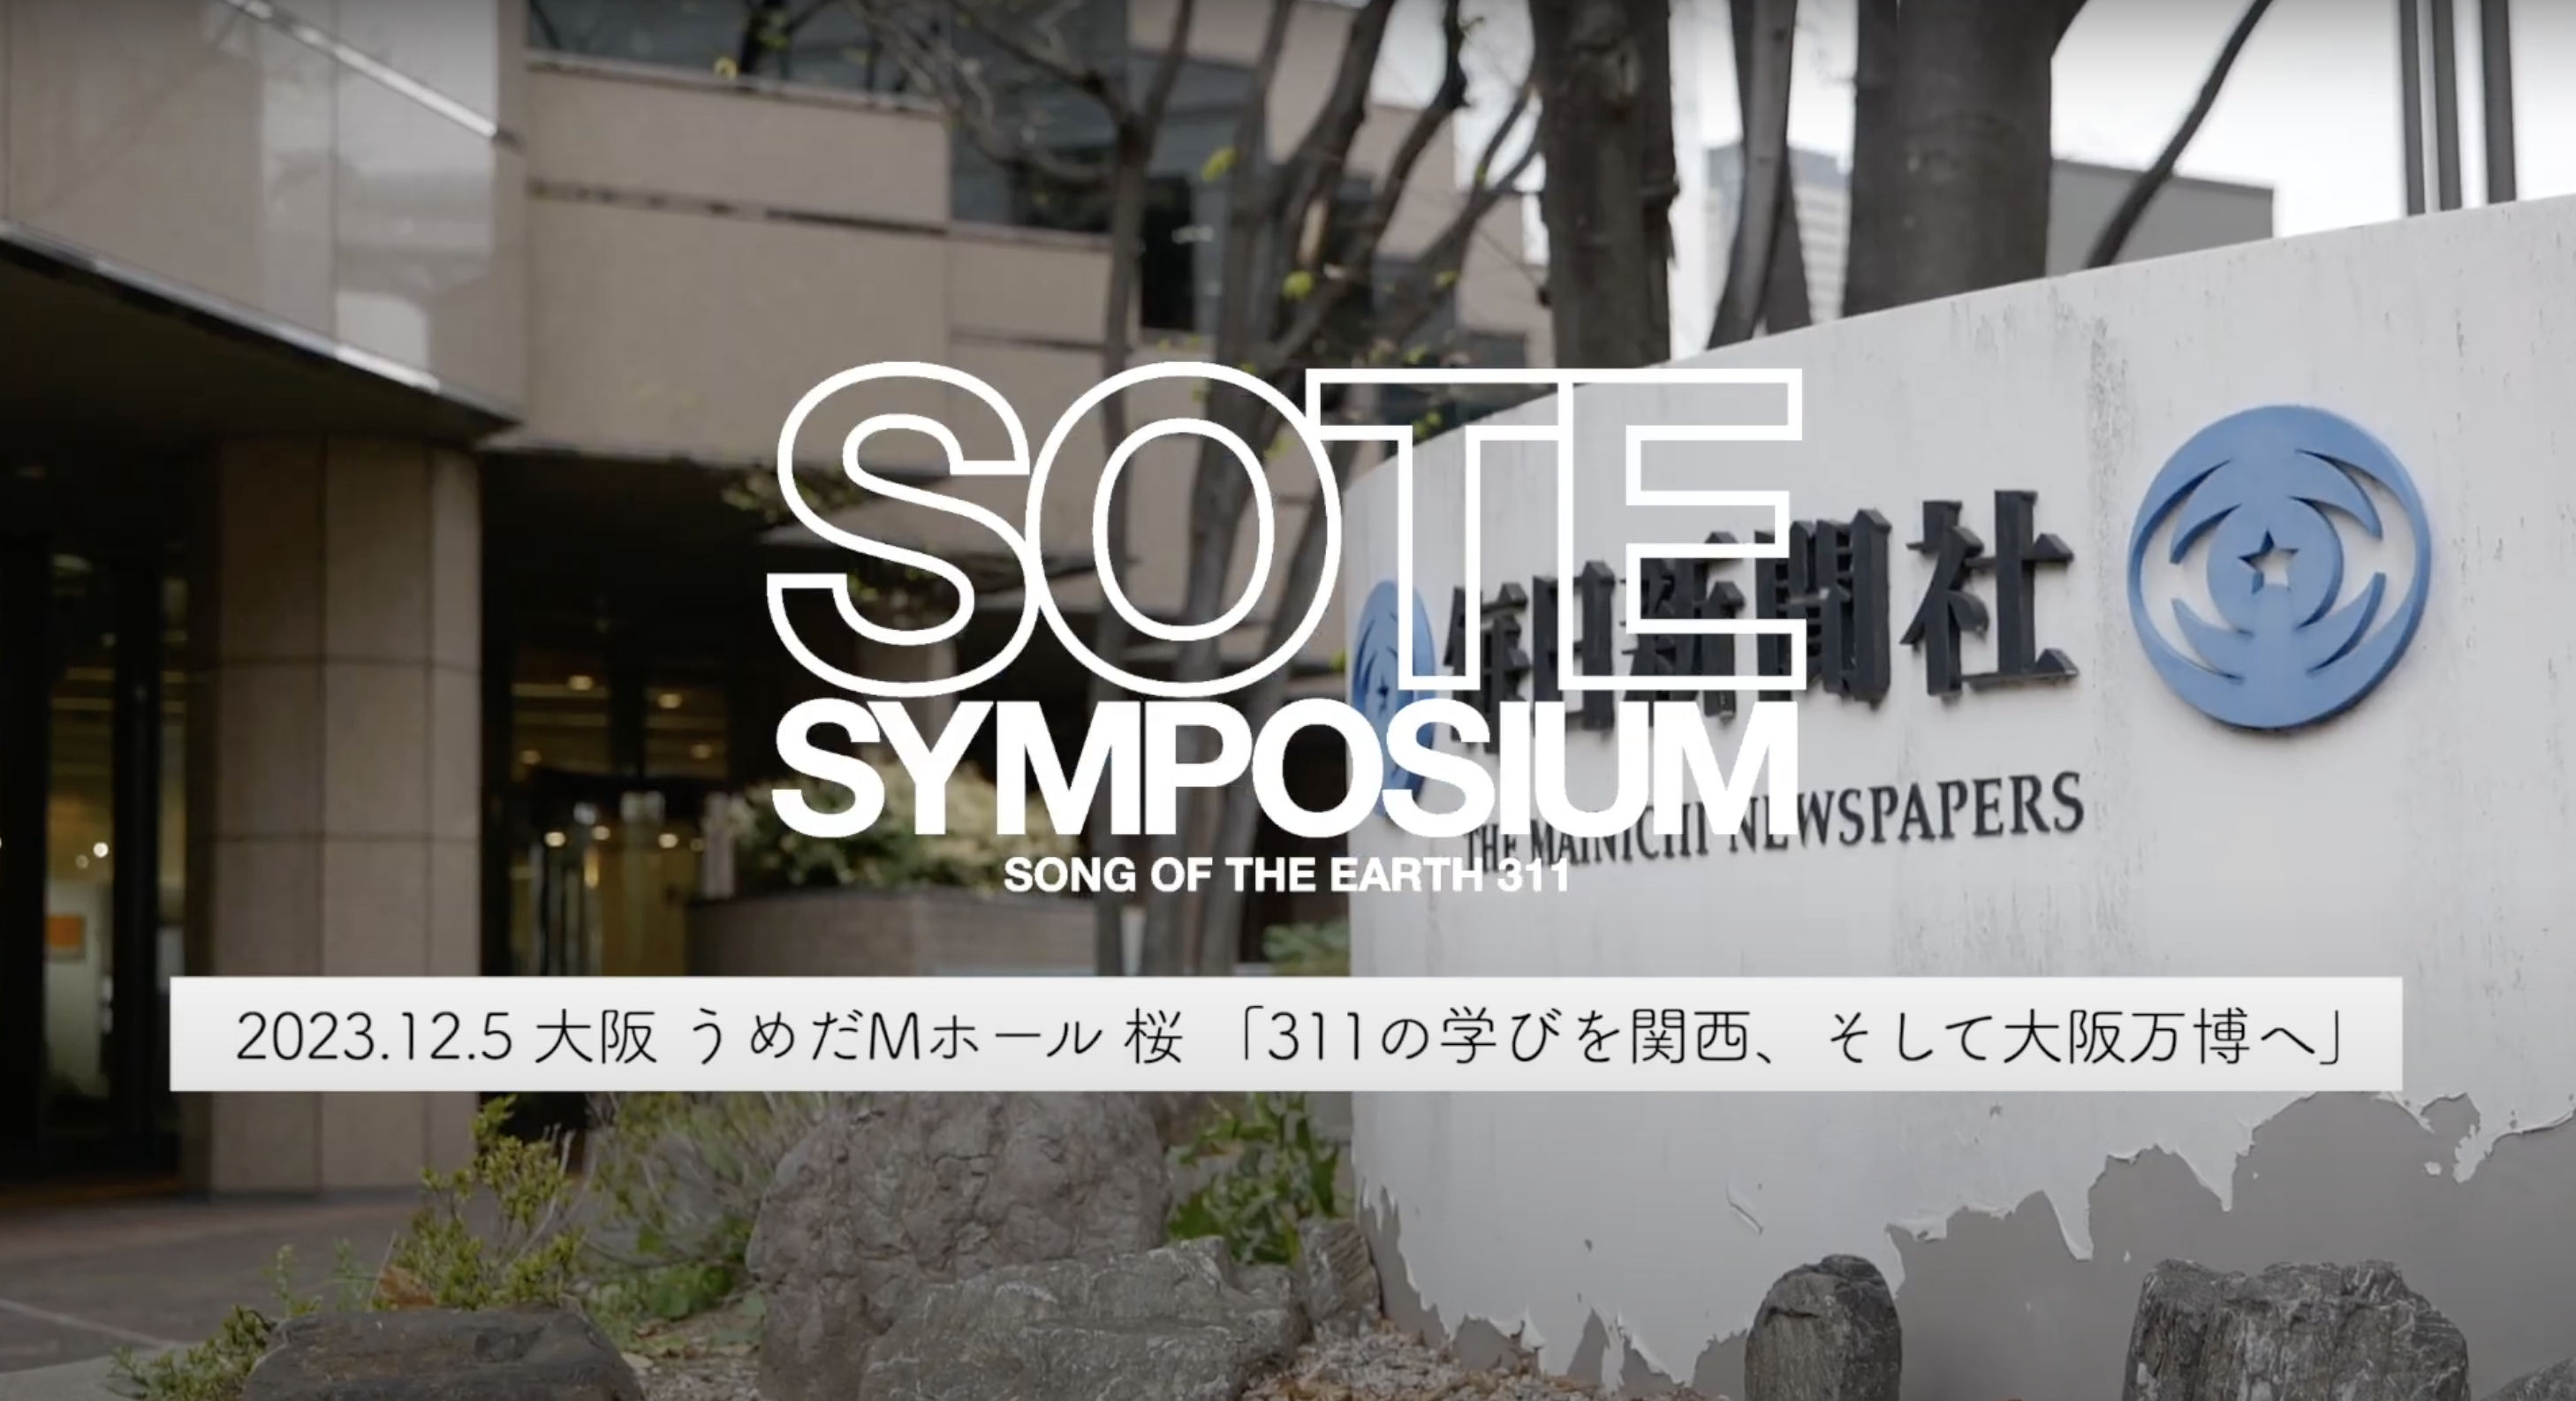 「SOTE SYMPOSIUM 大阪会場」の様子がYouTubeにアップされました！